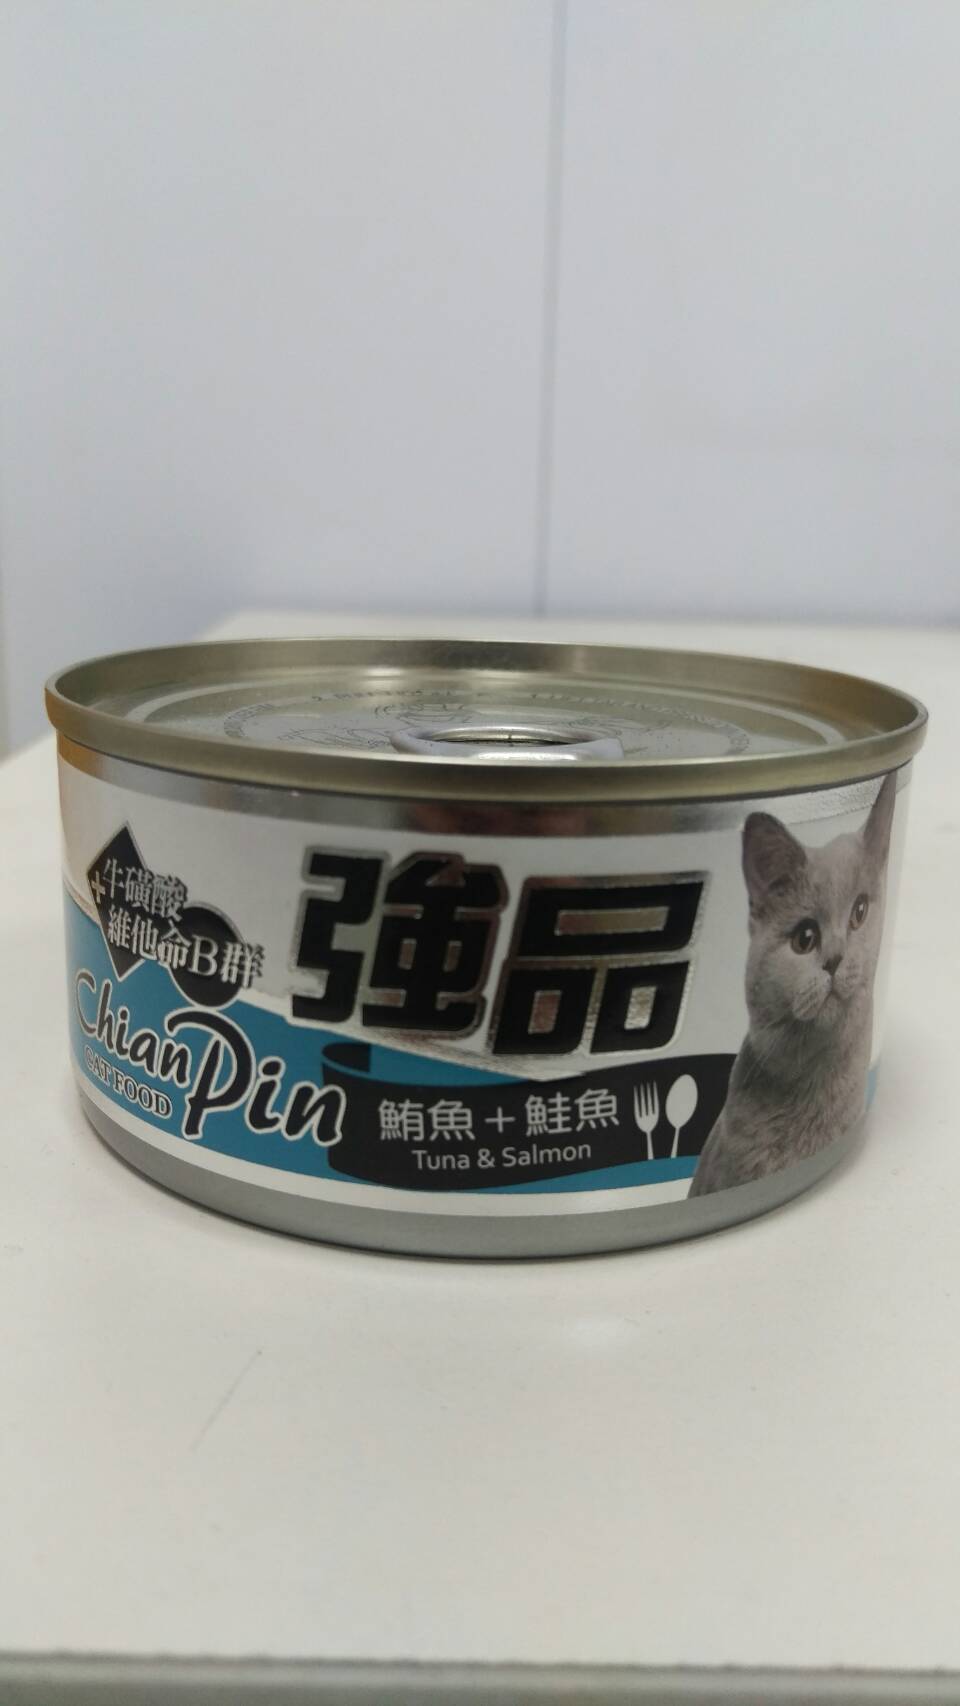 強品貓罐-鮪魚+鮭魚
Chian Pin cat can- tuna+salmon